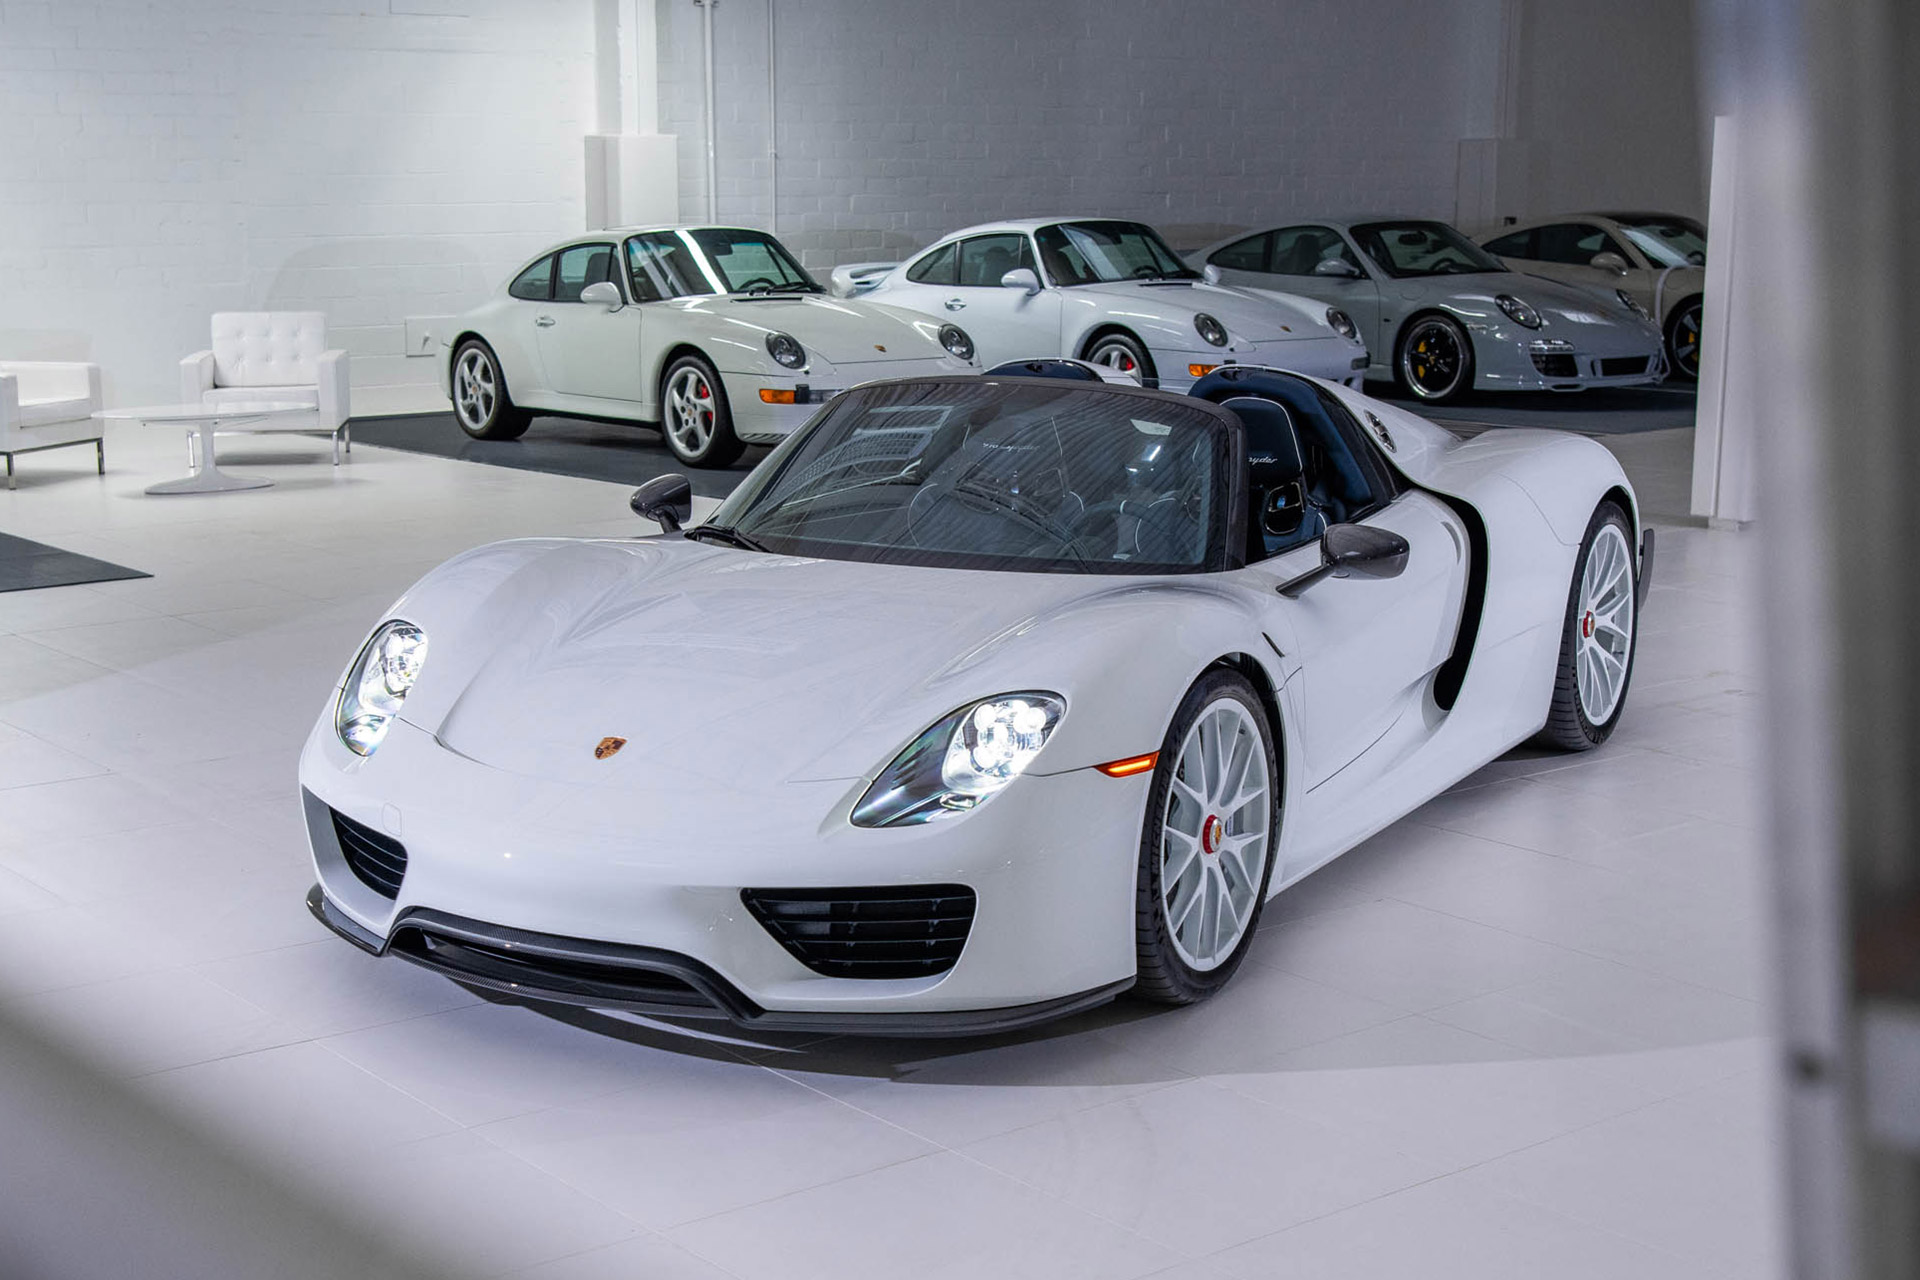 The White Porsche Collection | Uncrate